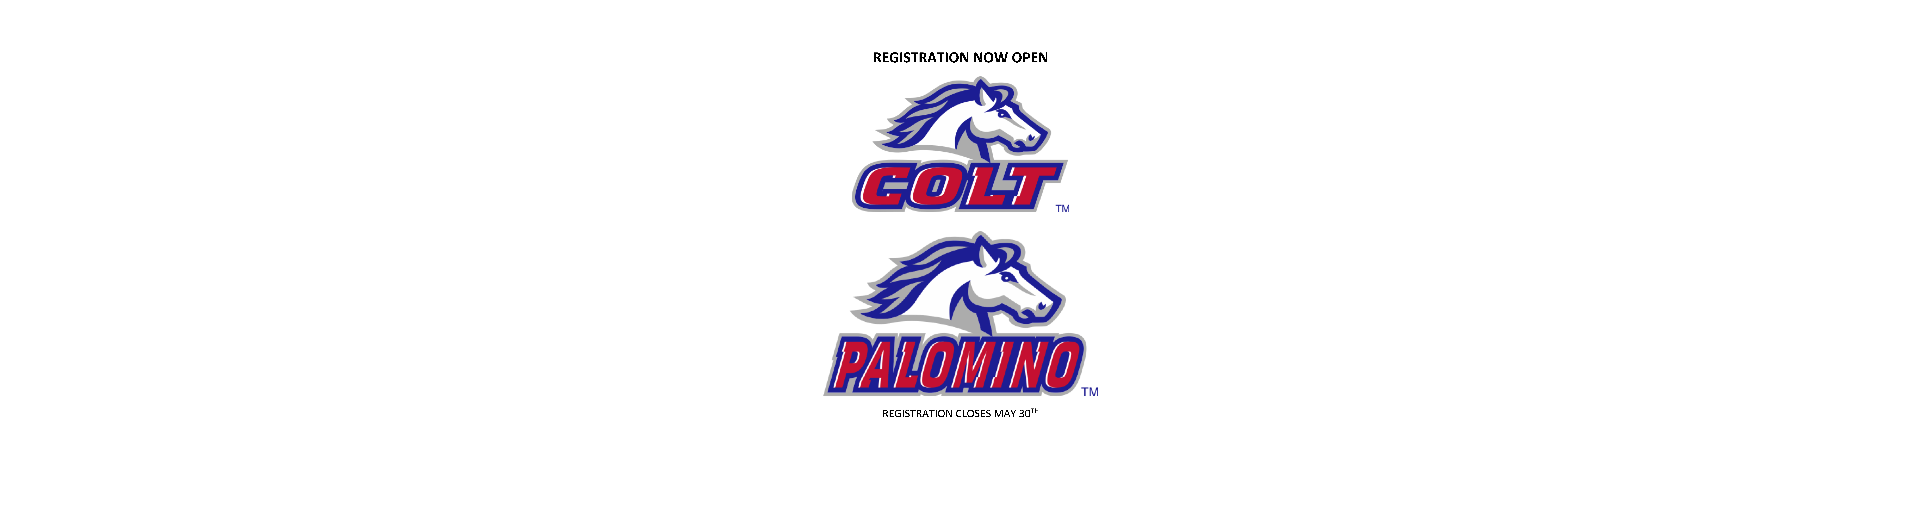 Colt 16u & Palomino 19u Registraton Now Open